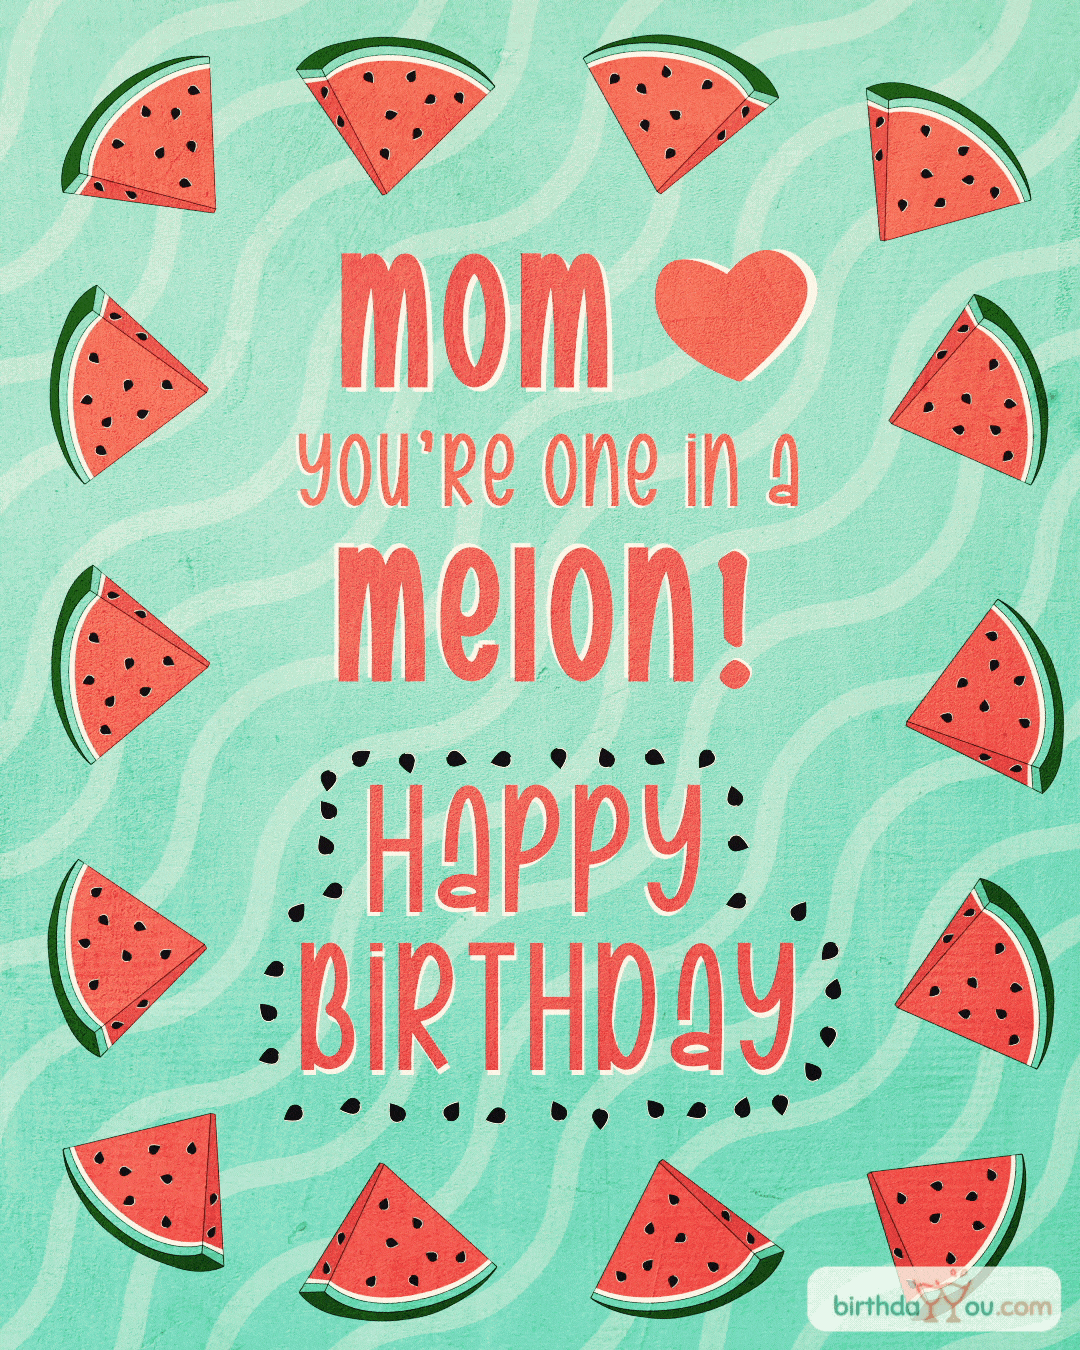 animated happy birthday mom images